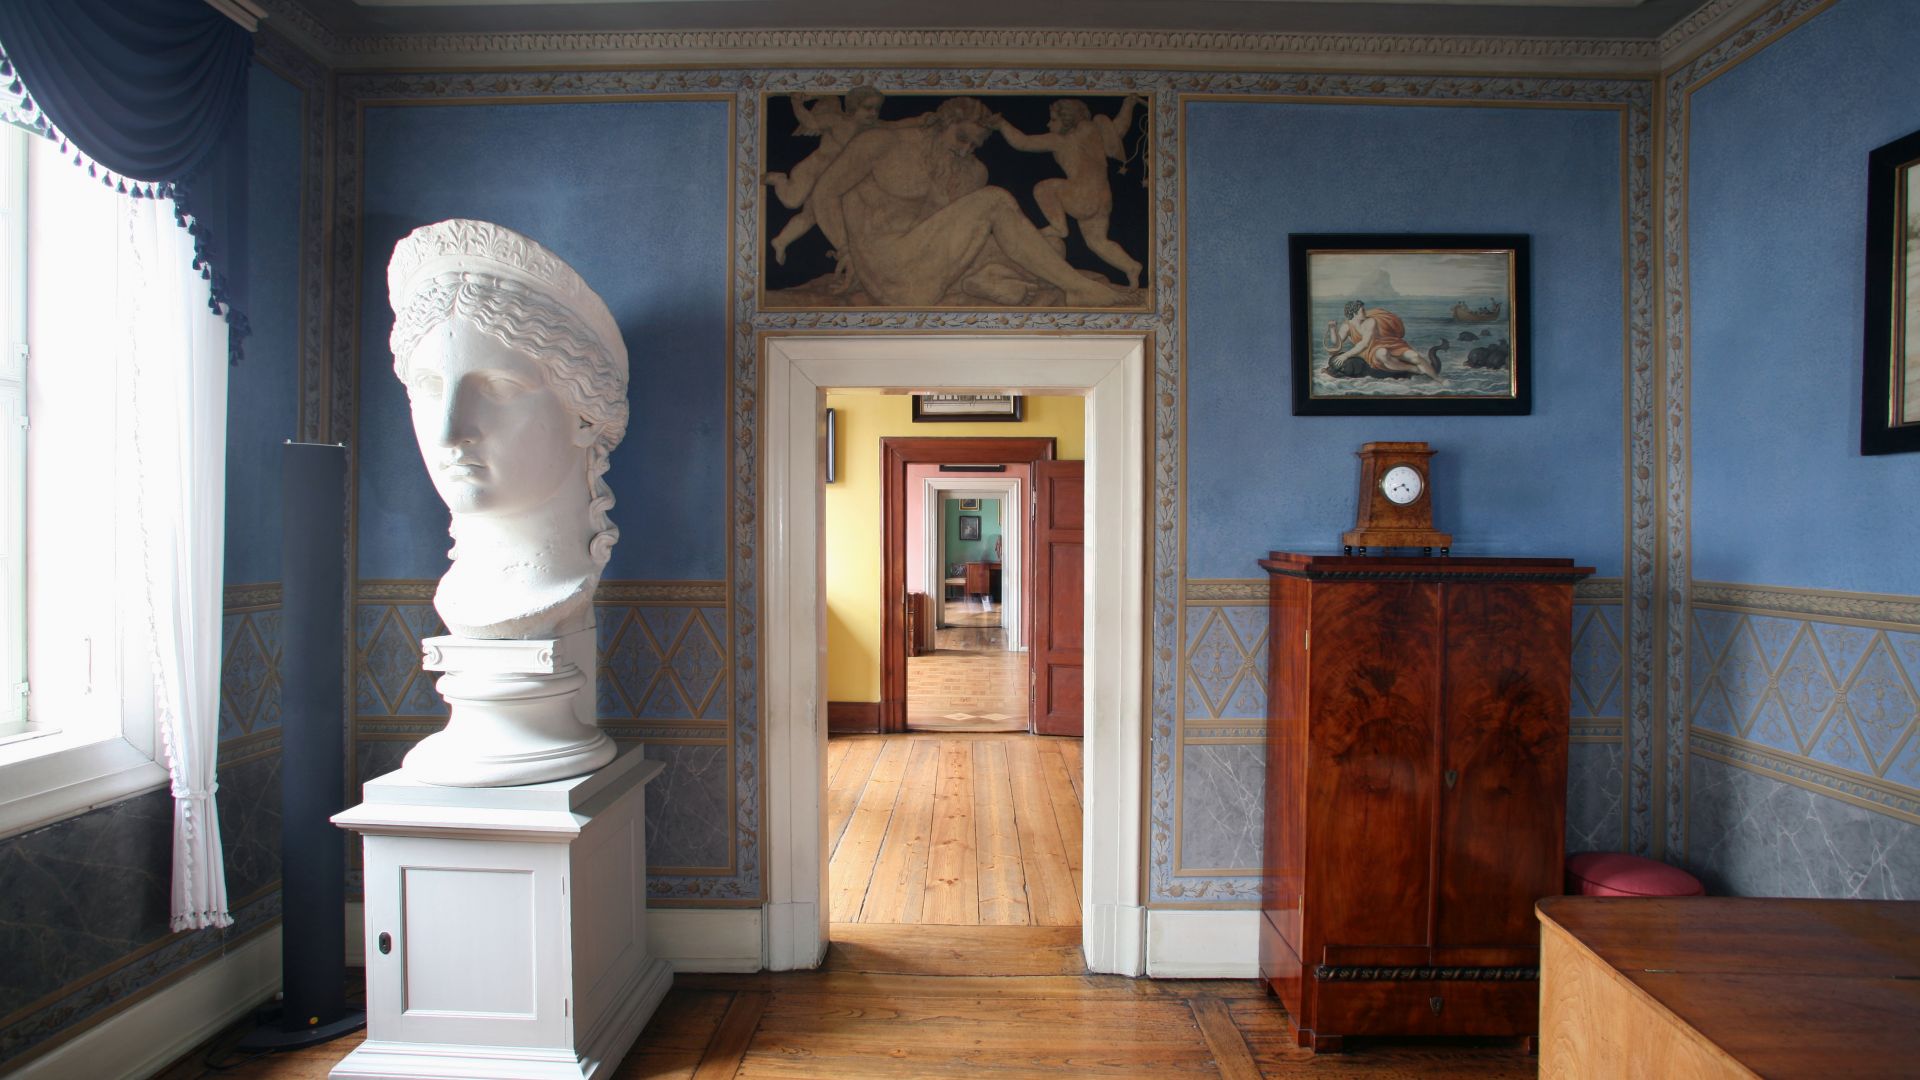 Weimar Classics Foundation, Goethe National Museum, Goethe's house, memorial, room of Juno, colossal bust of Juno |